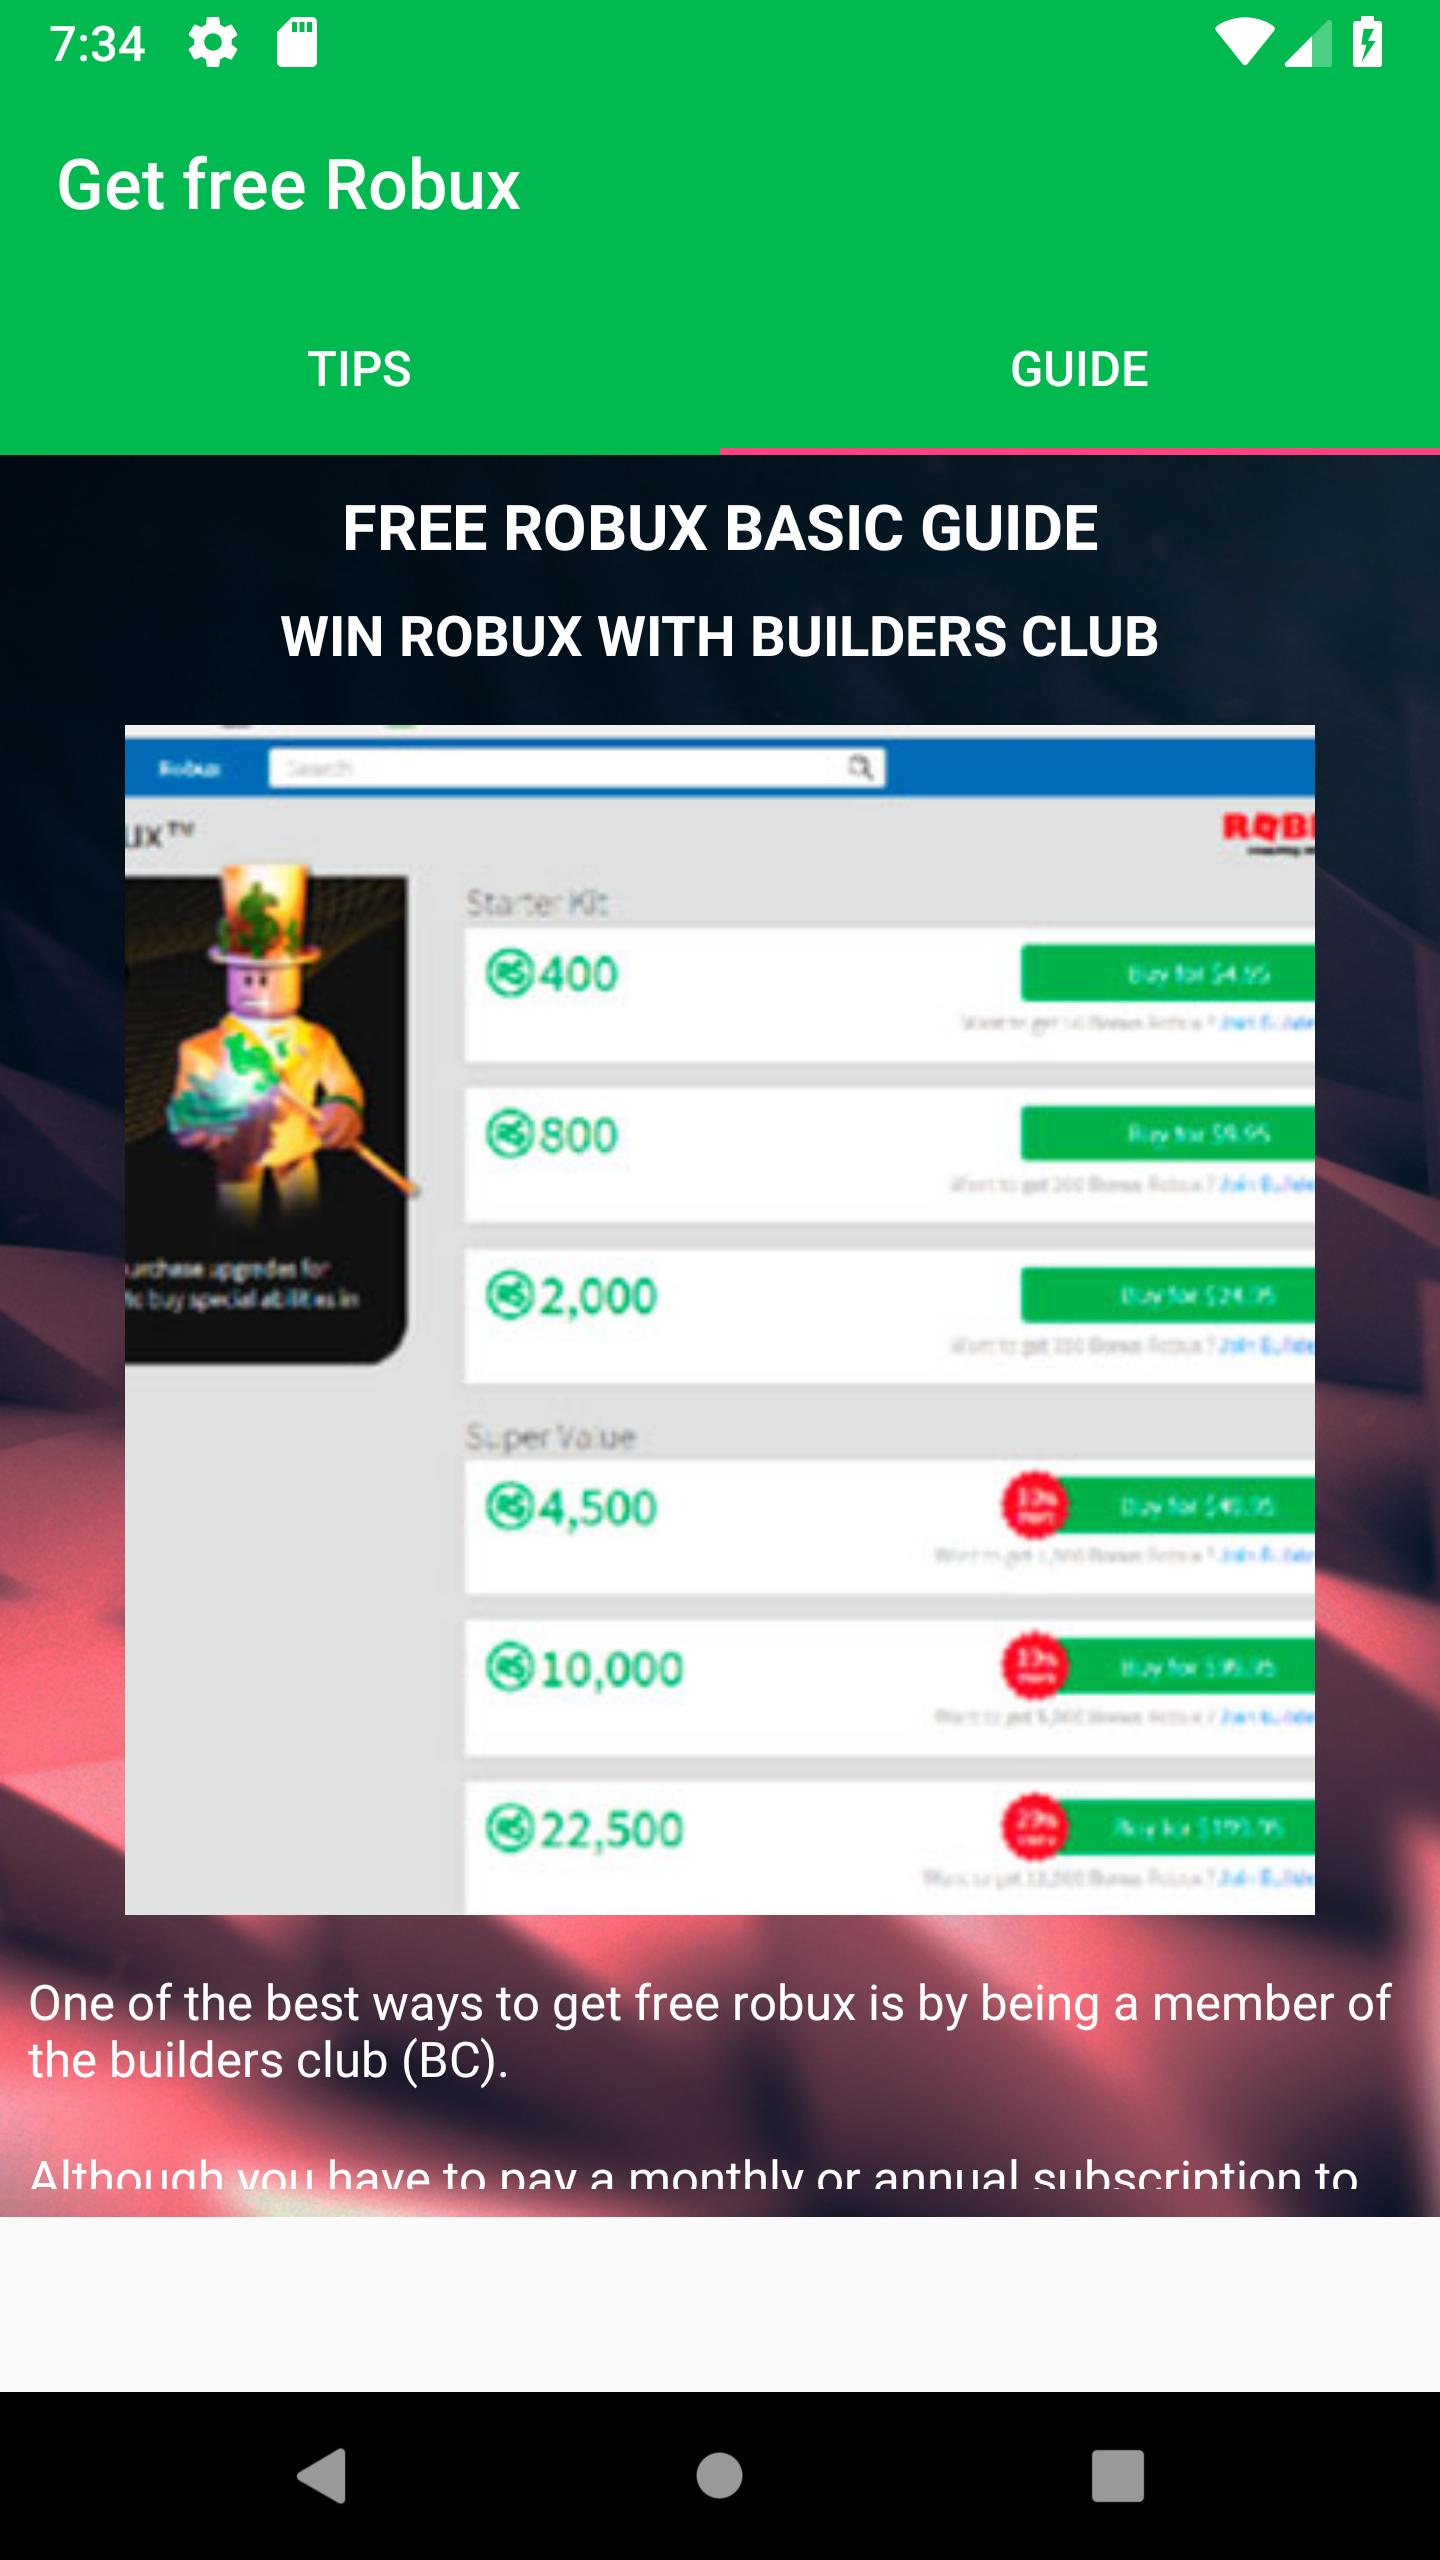 Consigue Robux Gratis Hoy Trucos Consejos 2018 For Android Apk Download - como transferir robux